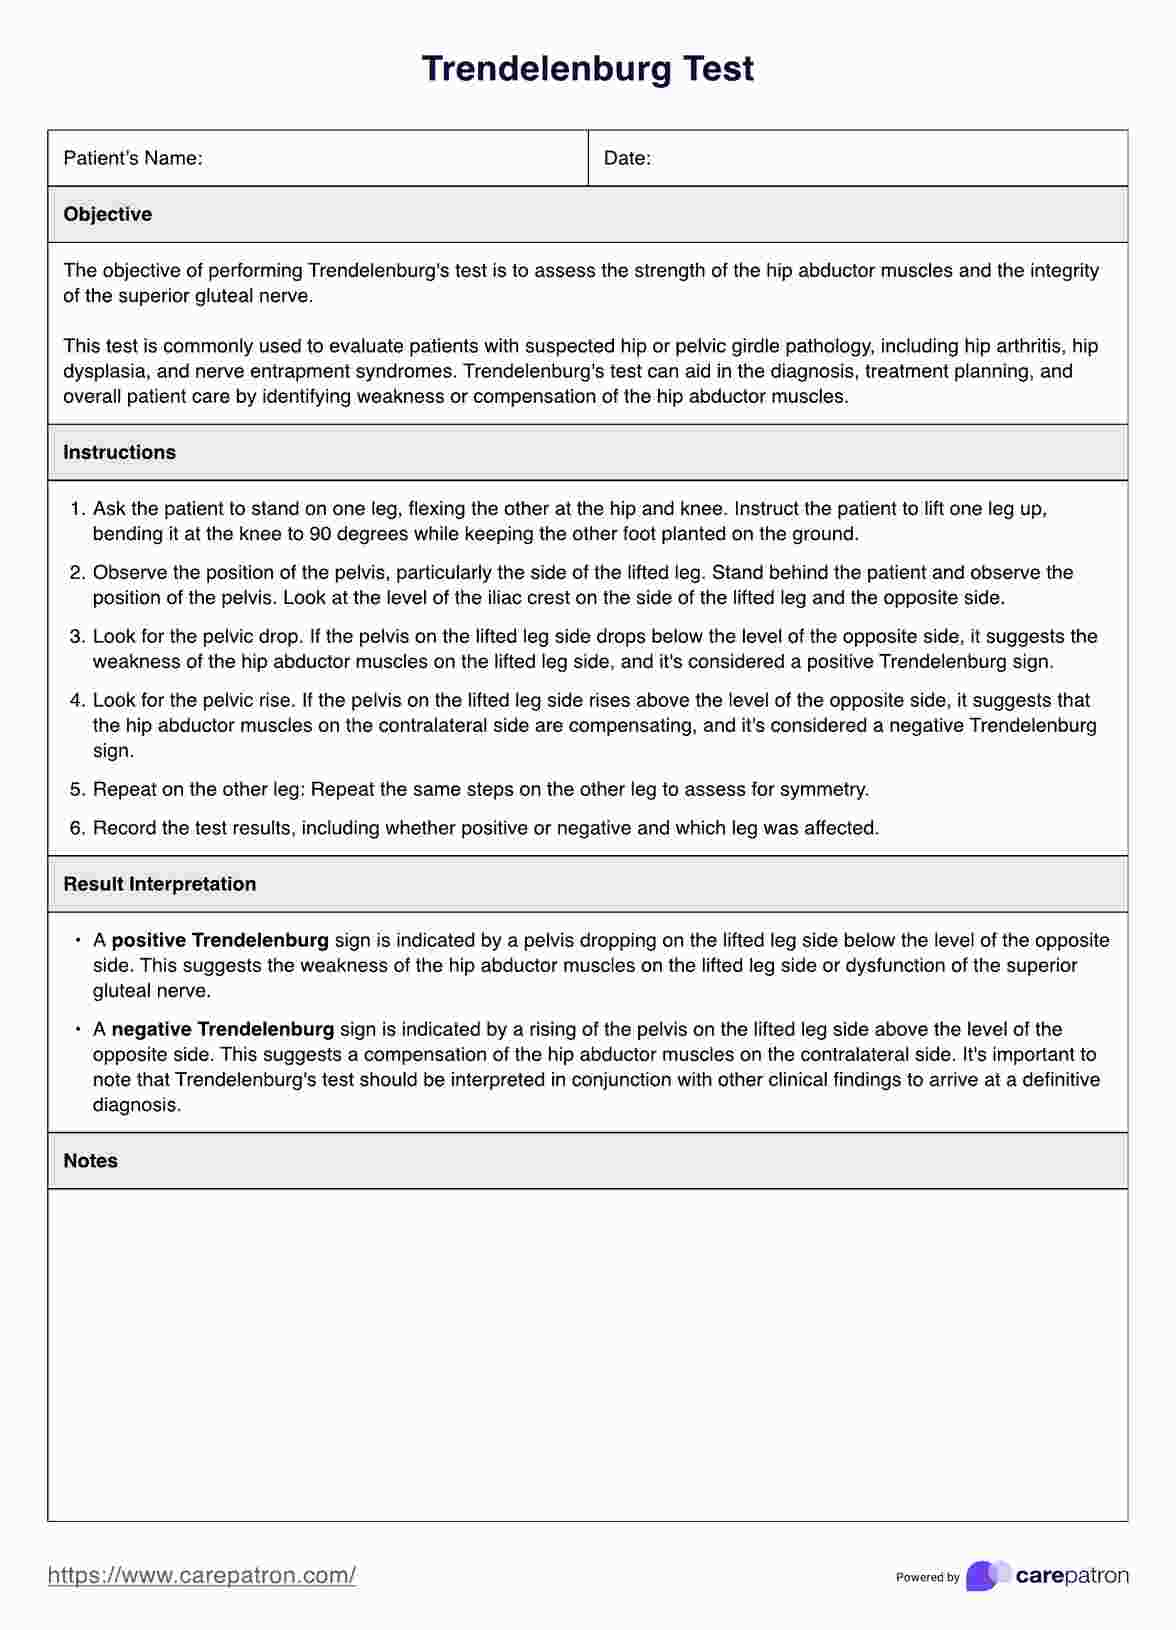 Trendelenburg Test PDF Example